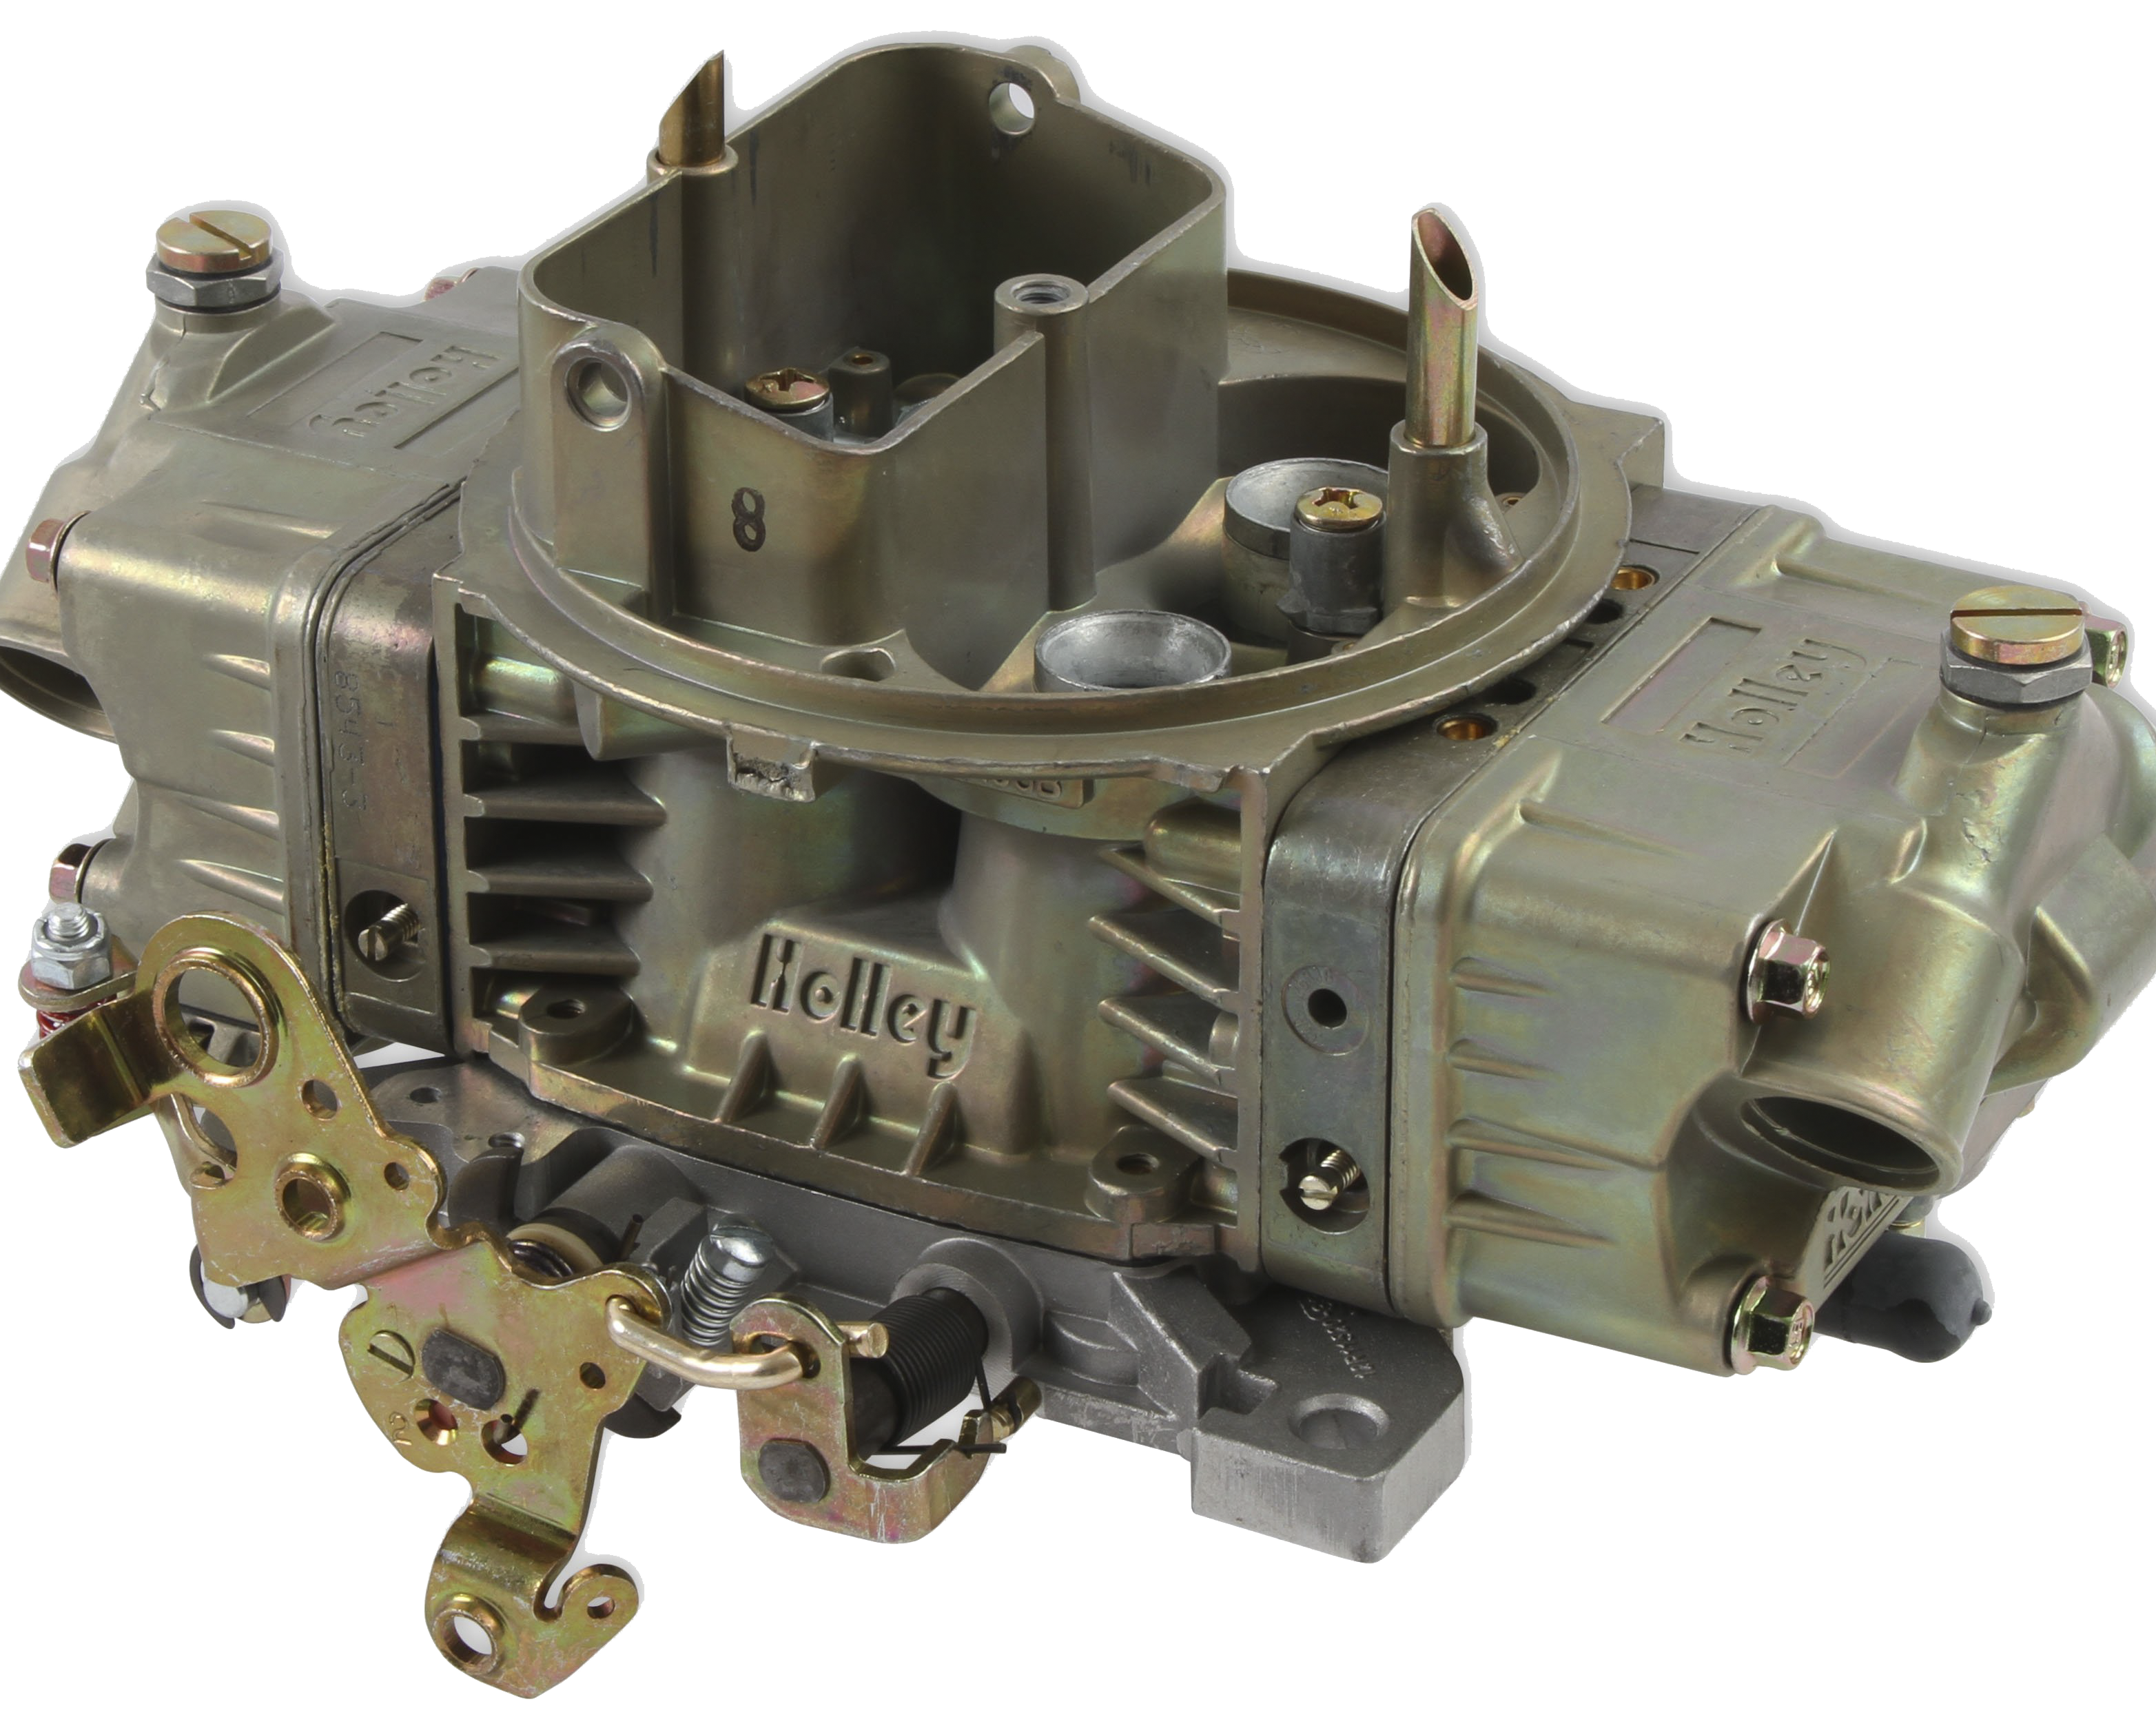 Holley double pumper race carburetor